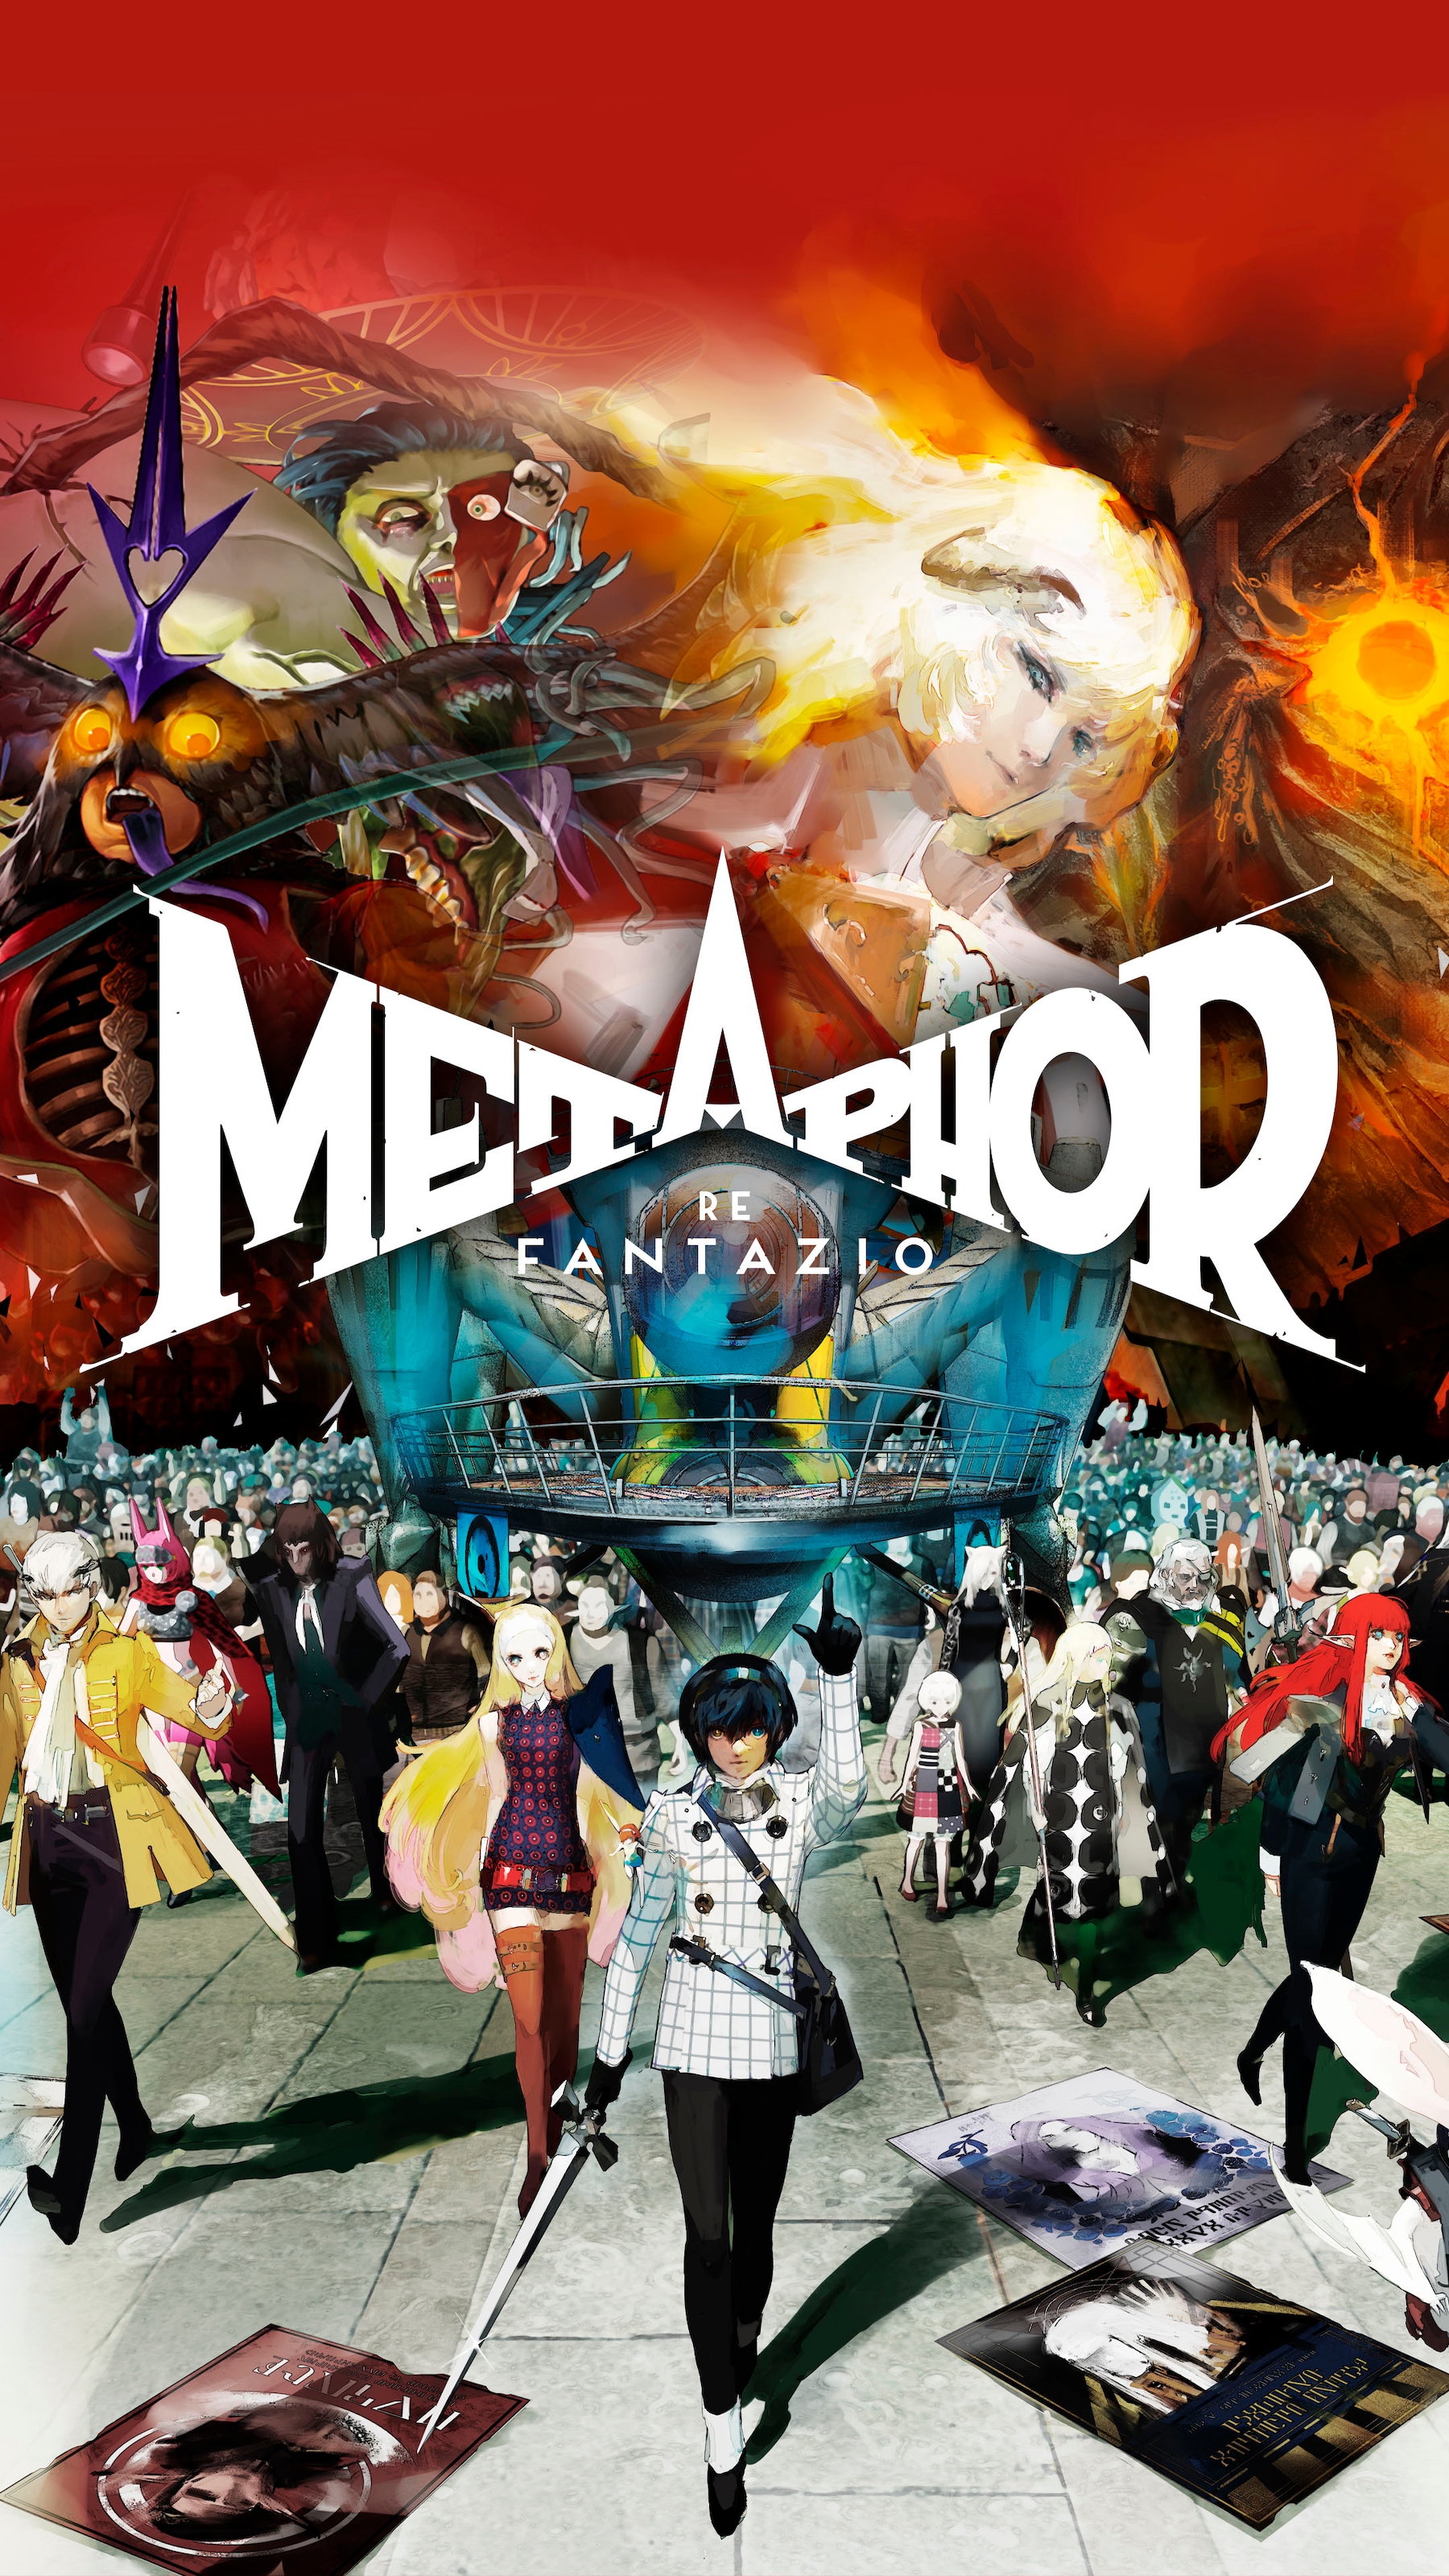 Atlus Spielesoftware »Metaphor: ReFantazio Steelbook Edition«, PC